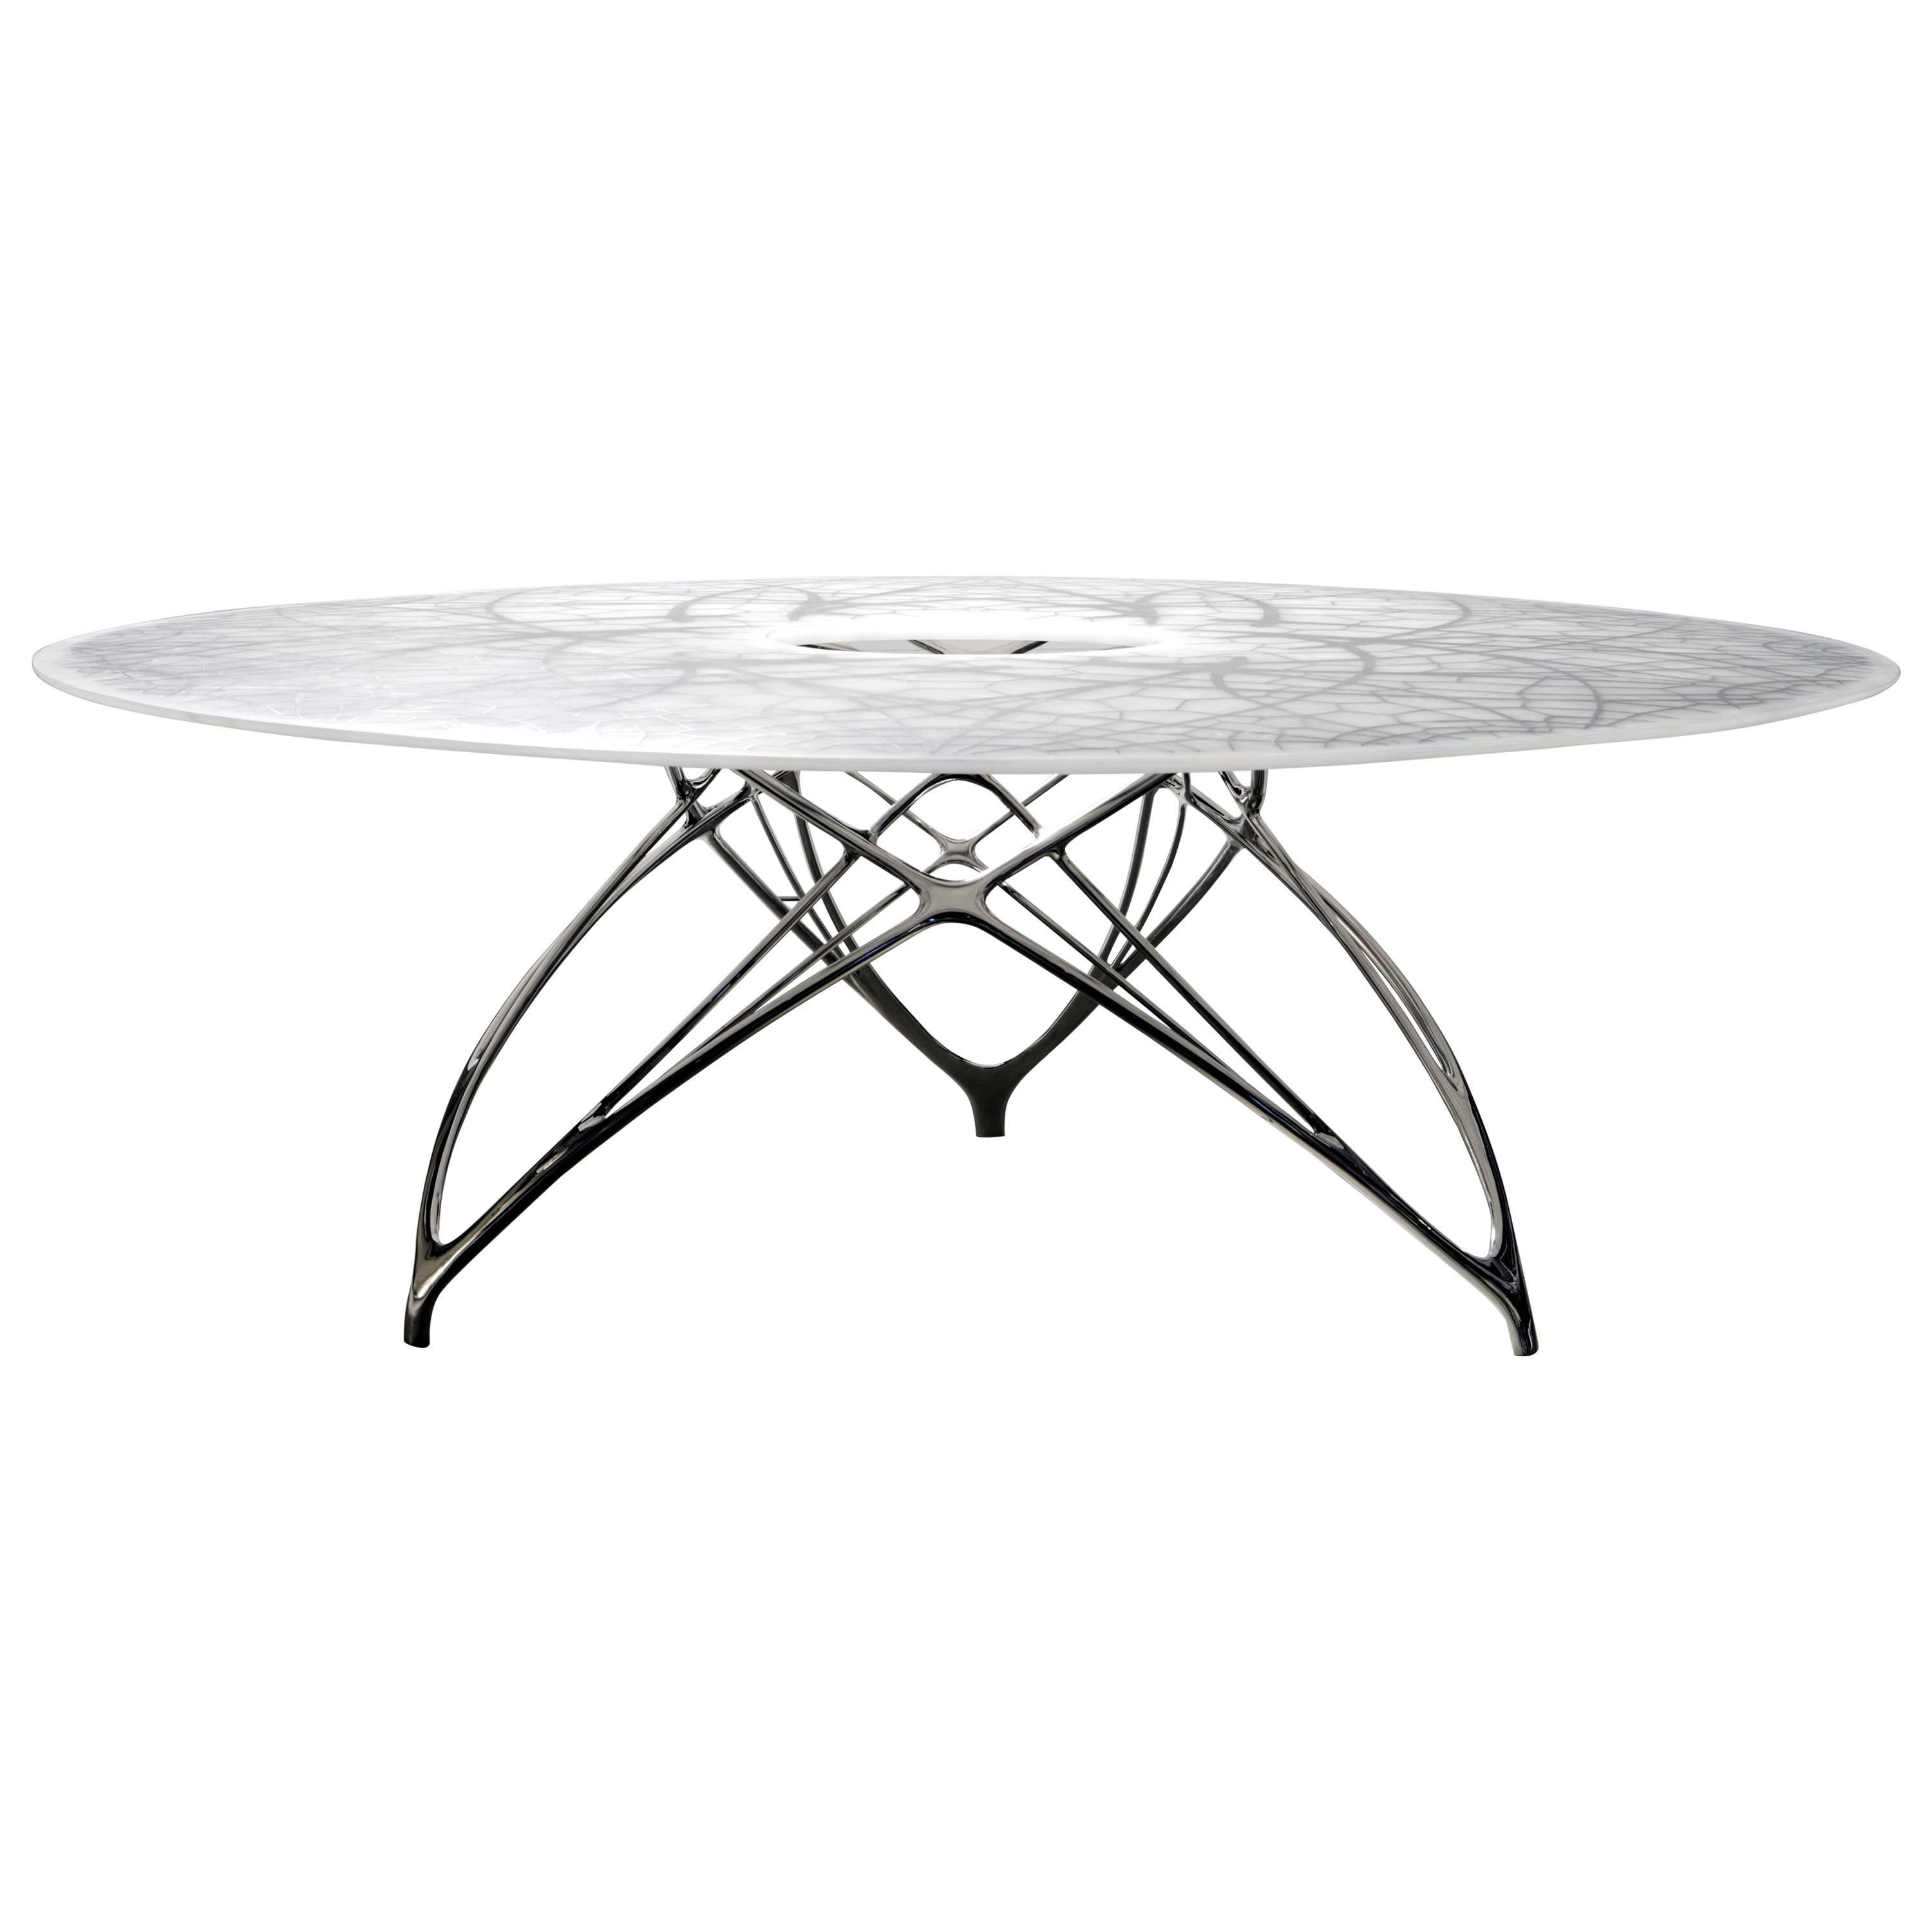 Joris Laarman, Dining Table, Resin, Steel, Aluminum, 2010